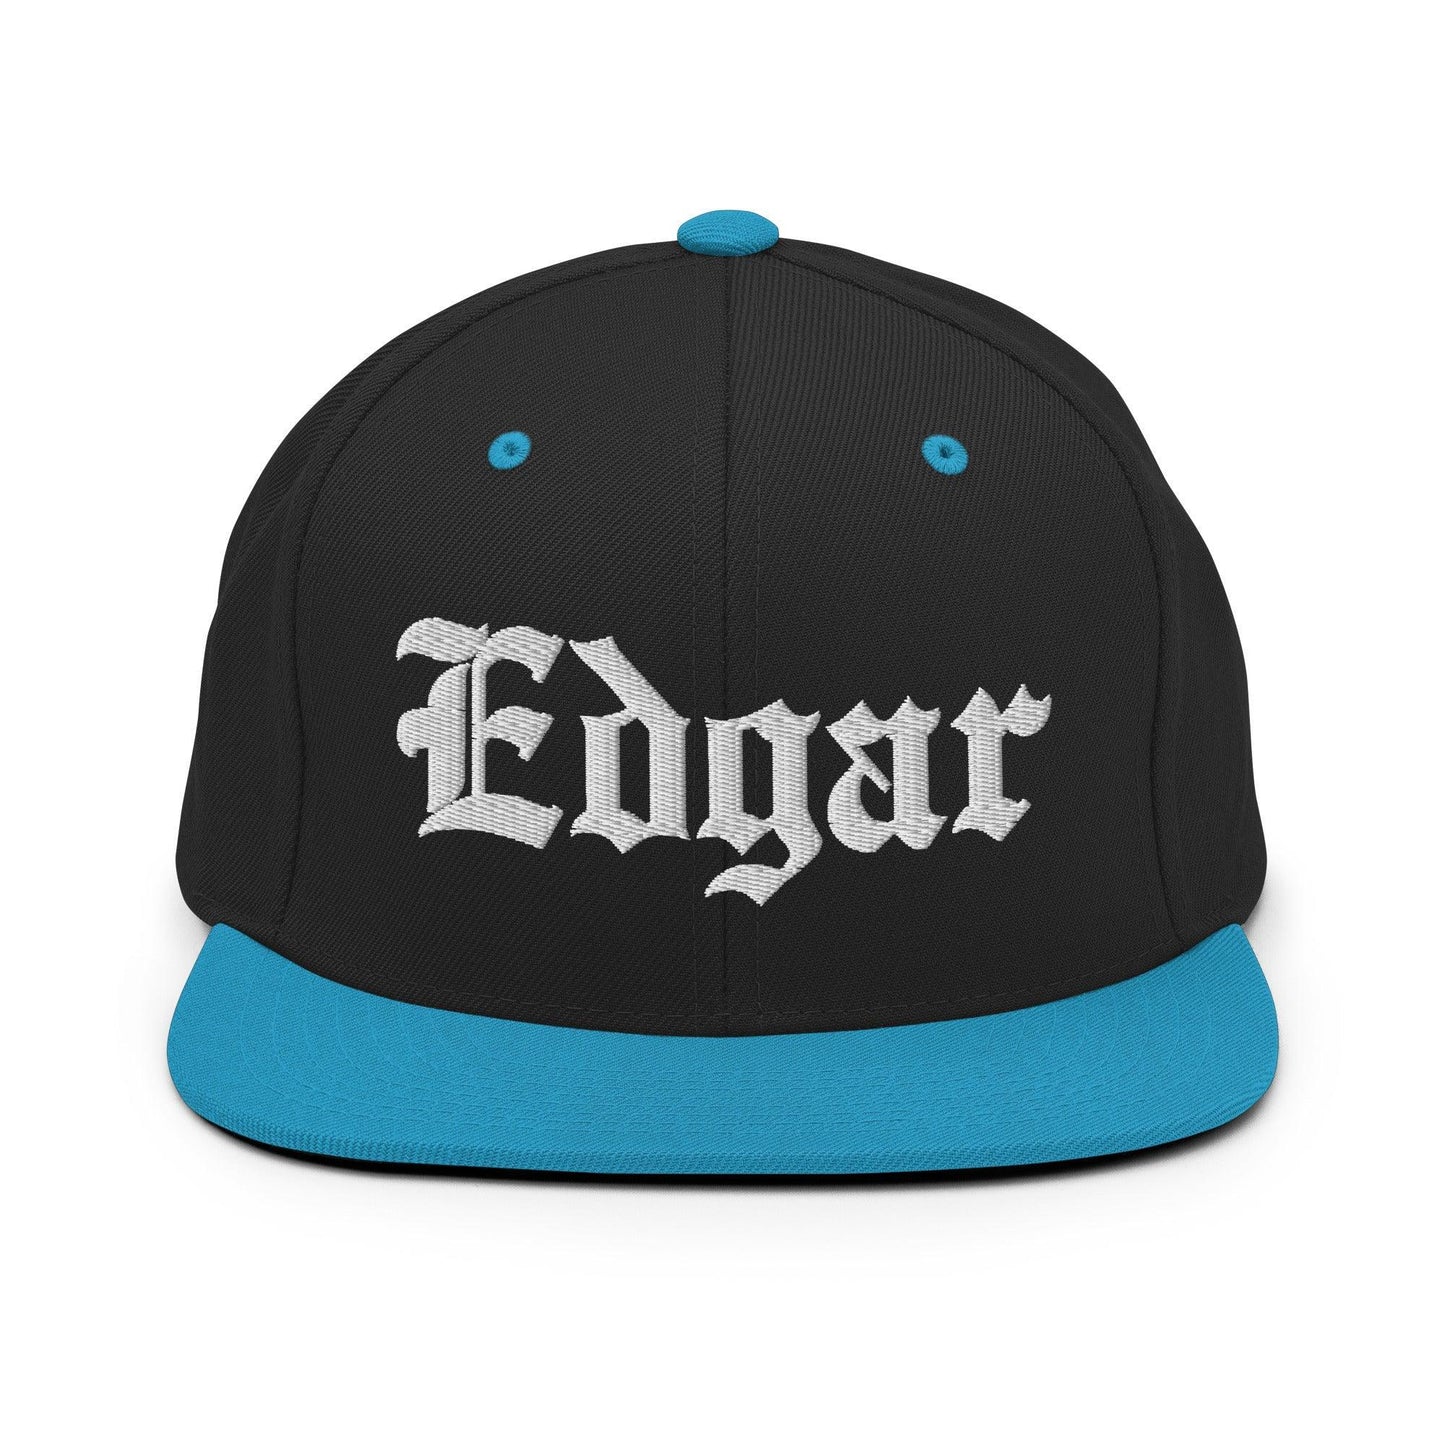 Edgar Old English Snapback Hat Black/ Teal